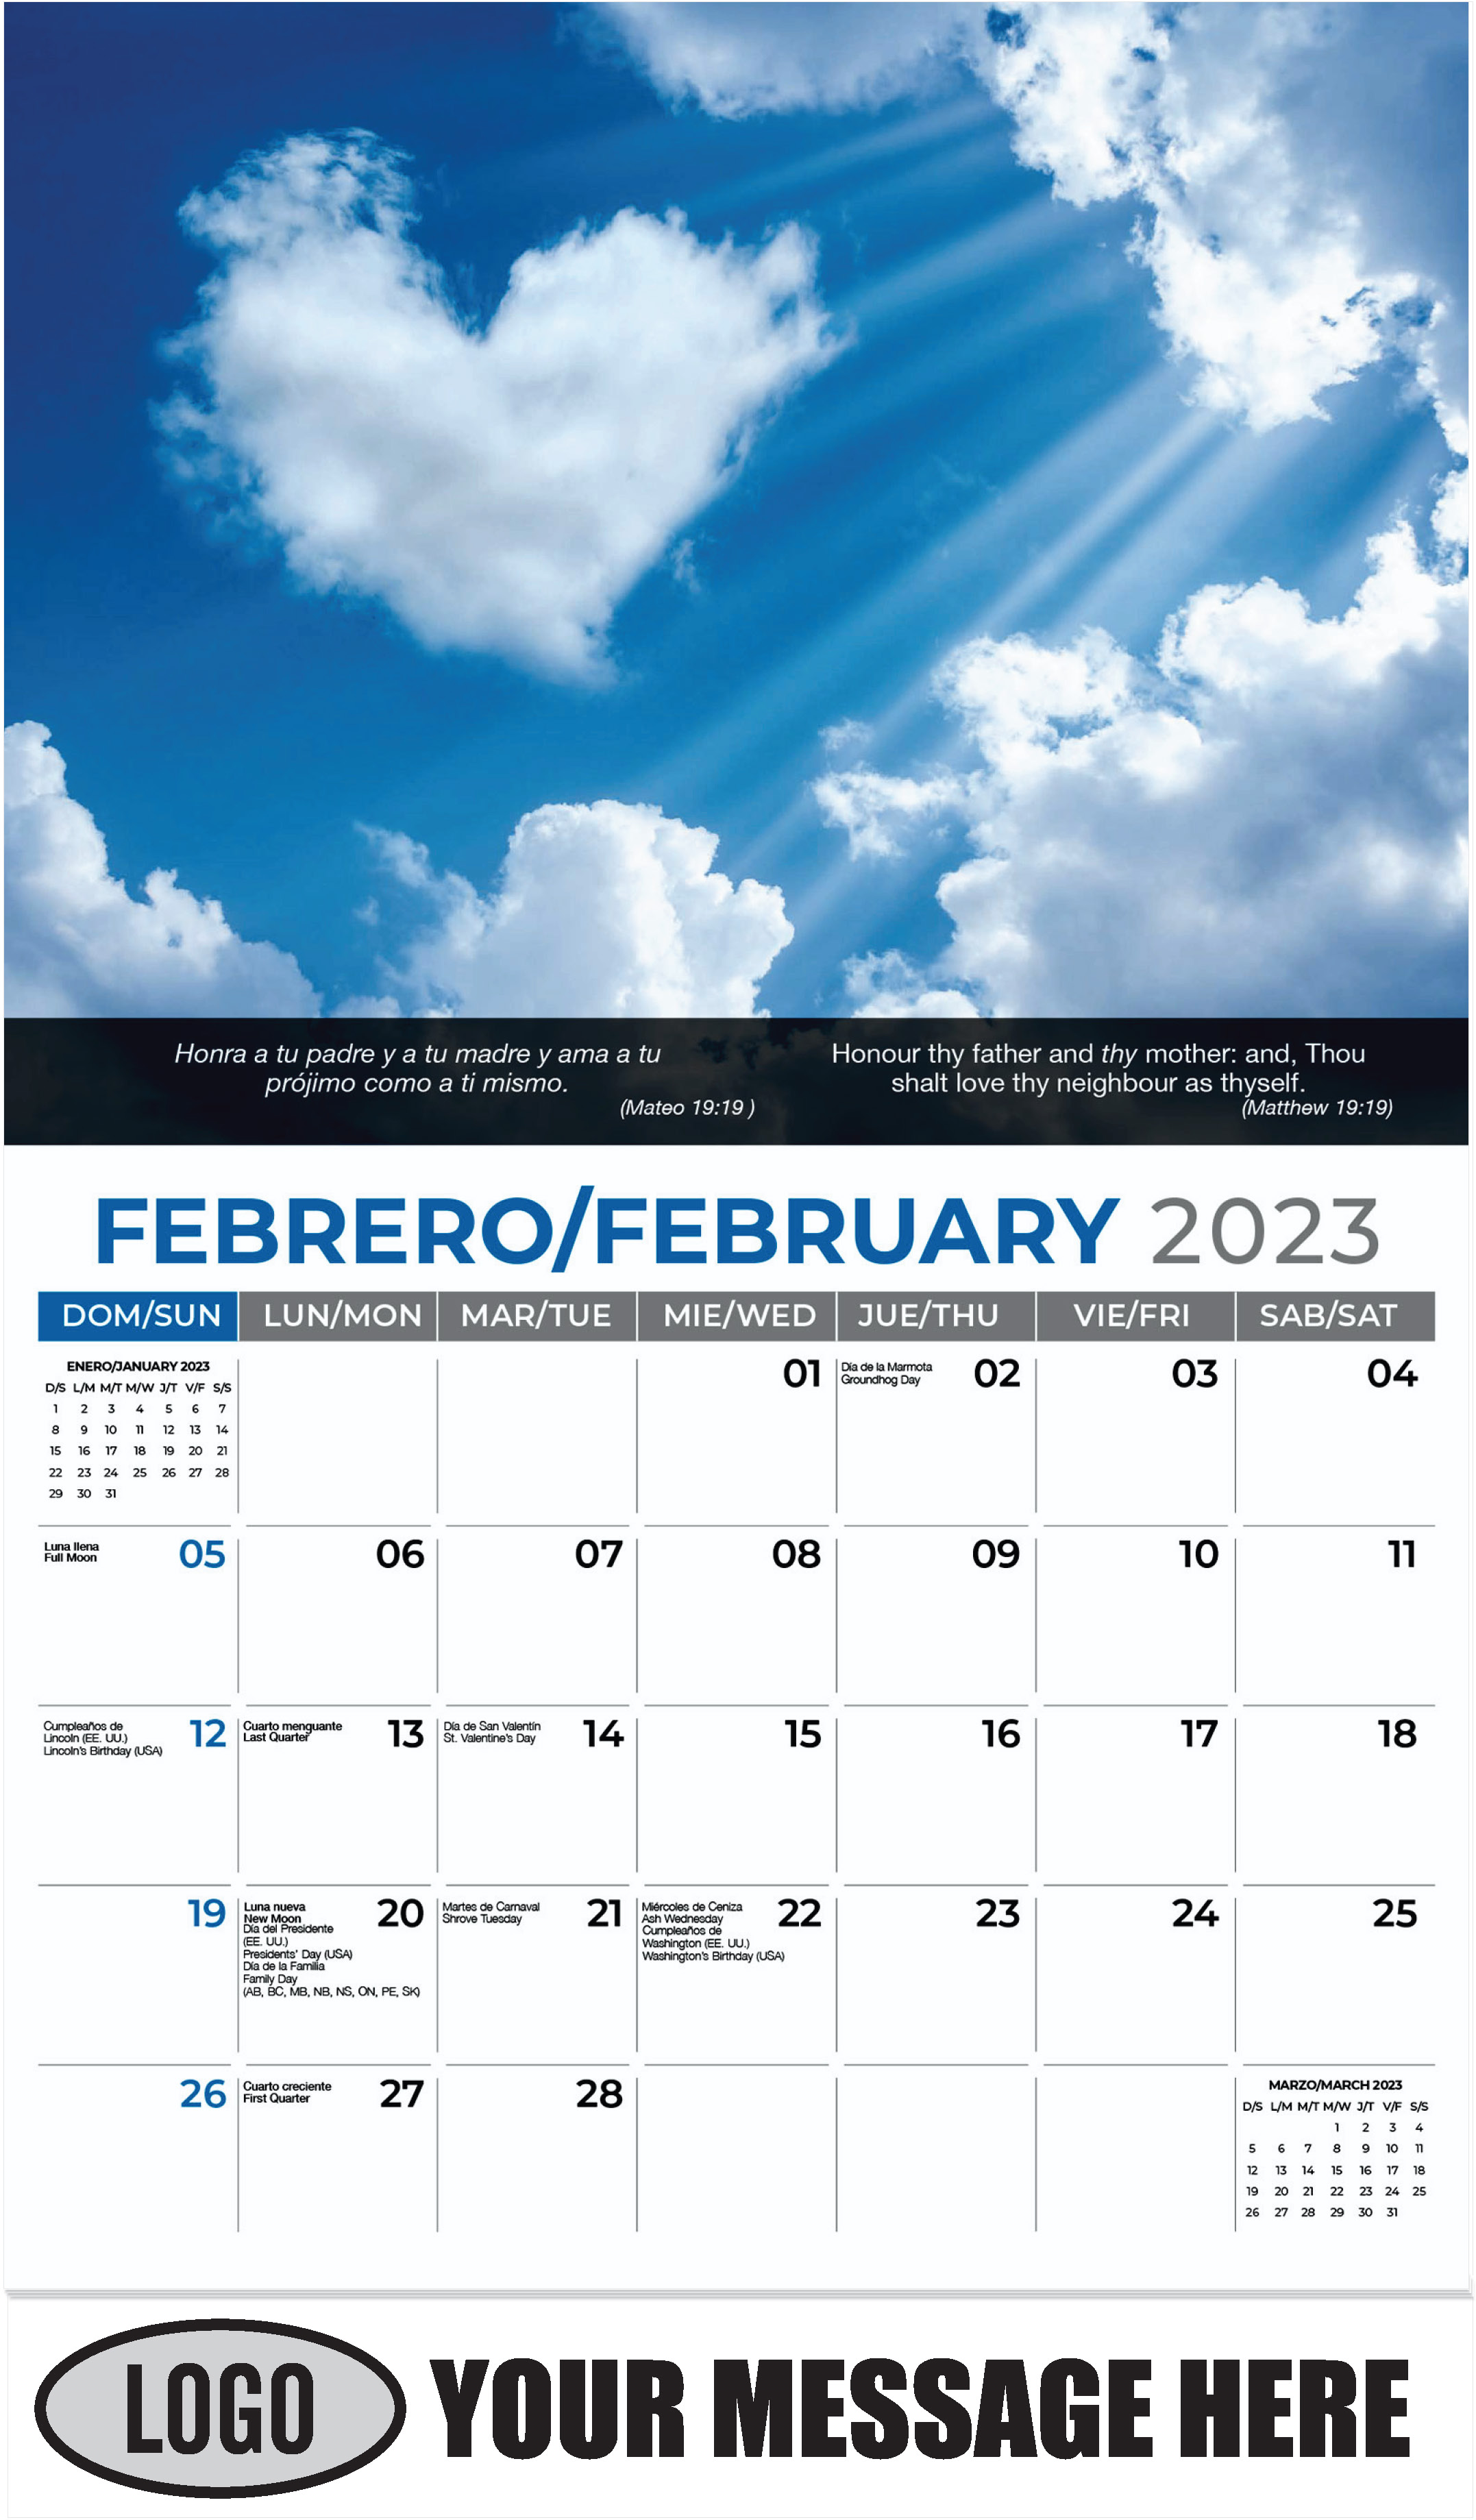 Heart in Sky - February - Faith-Passages-Eng-Sp 2023 Promotional Calendar